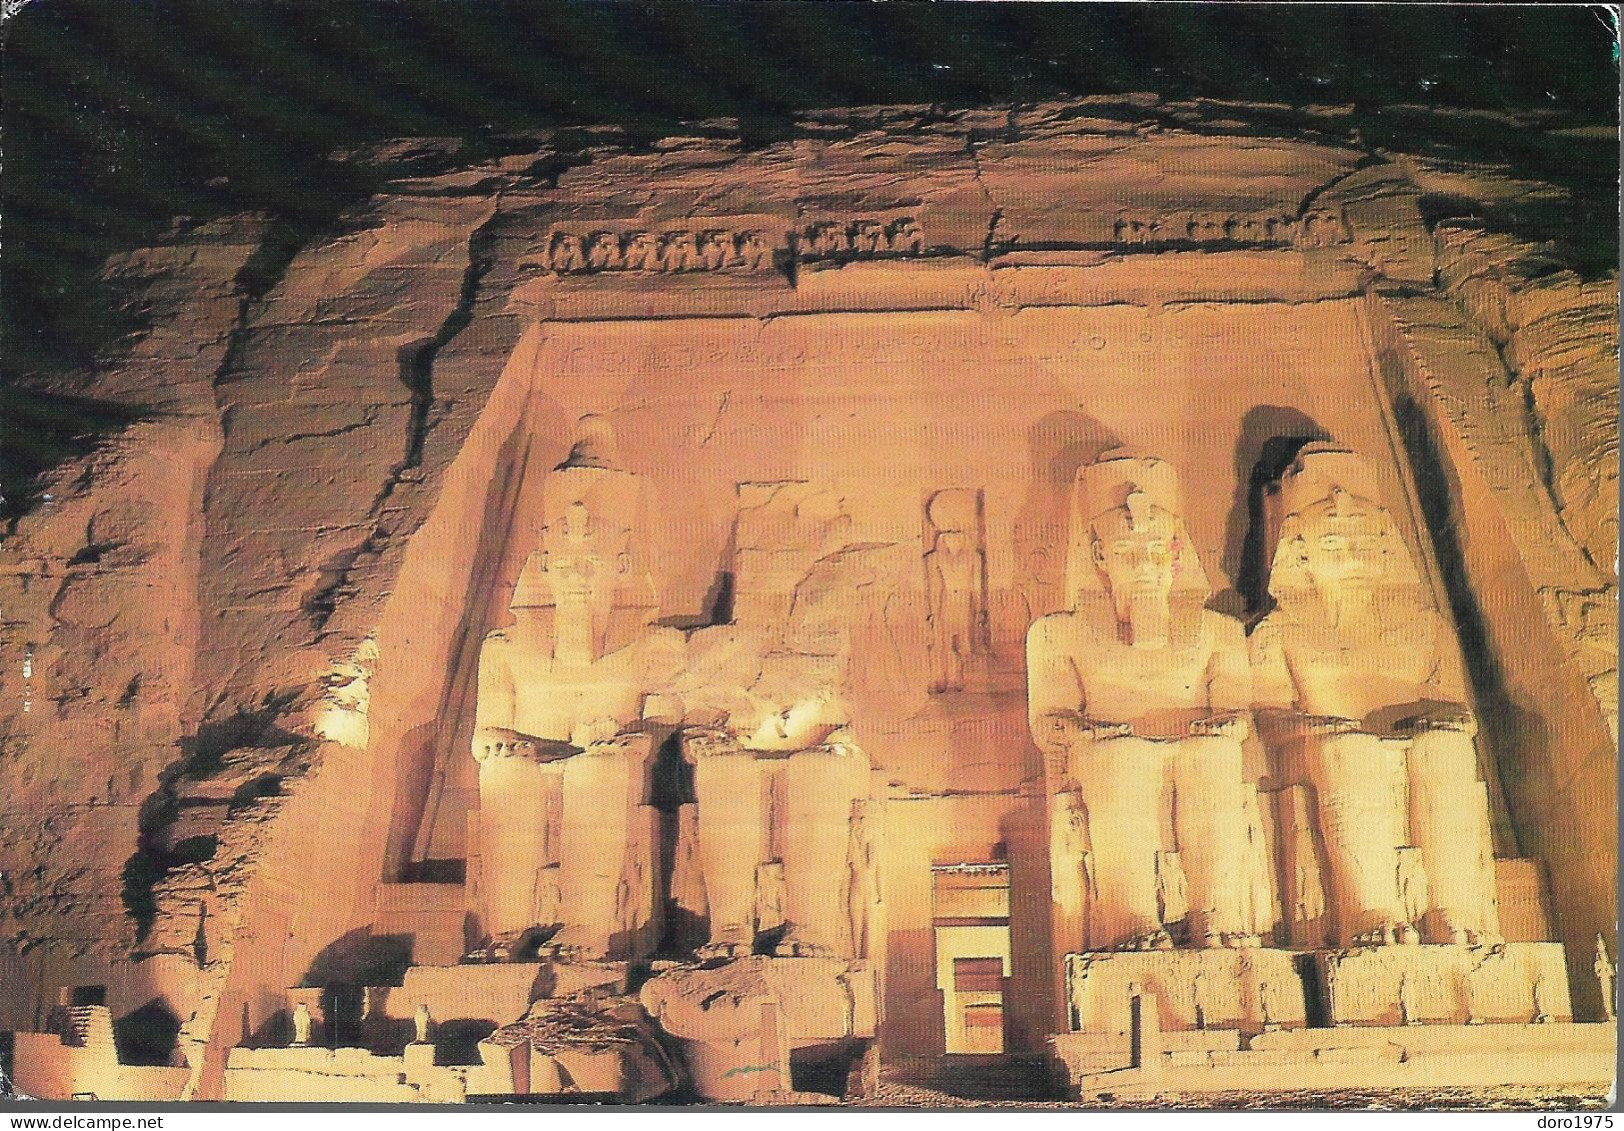 EGYPT - Abu Simbel Temple By Night - Used Postcard - Abu Simbel